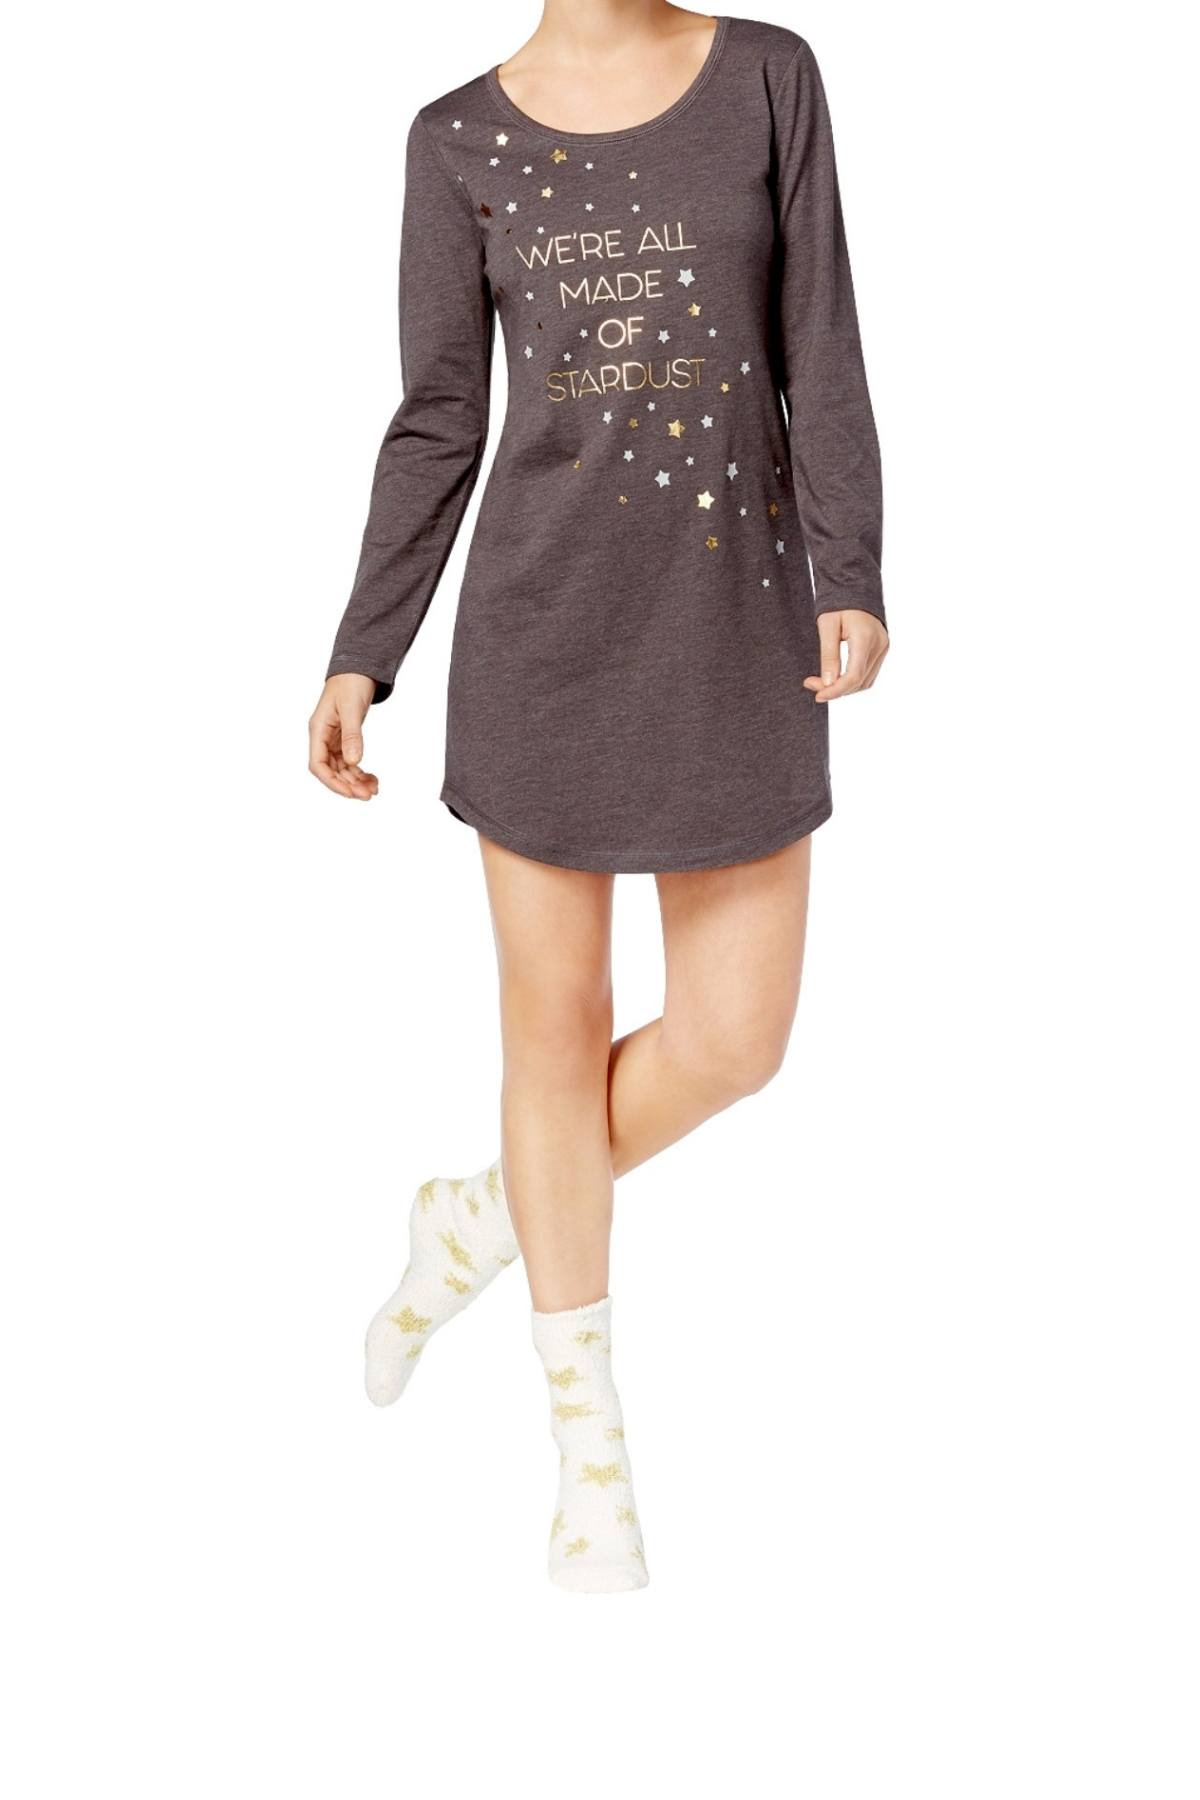 Jenni by Jennifer Moore Grey Stardust Graphic Sleepshirt And Socks Set